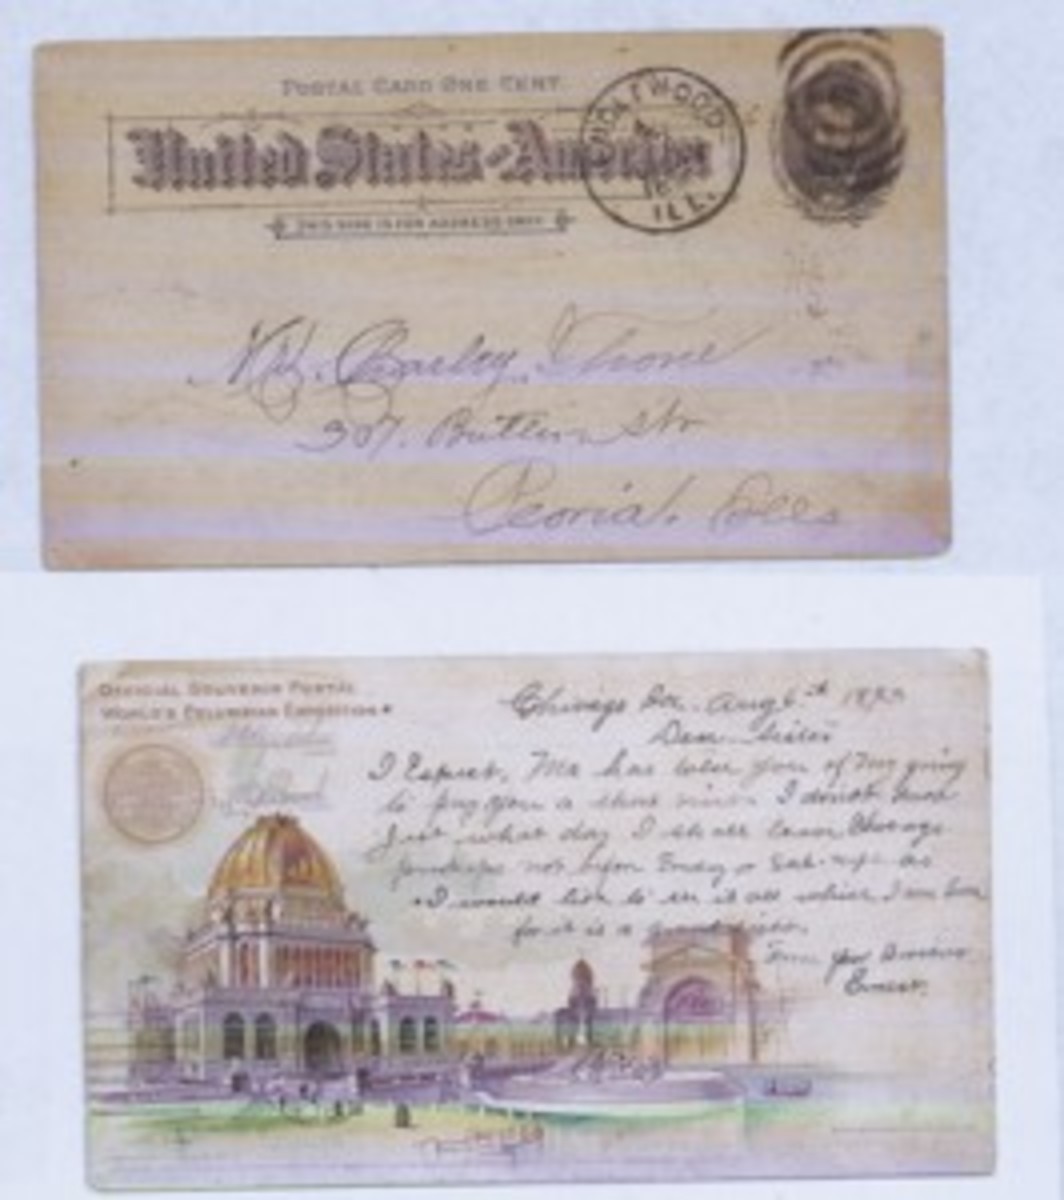 1893 World's Fair postcard